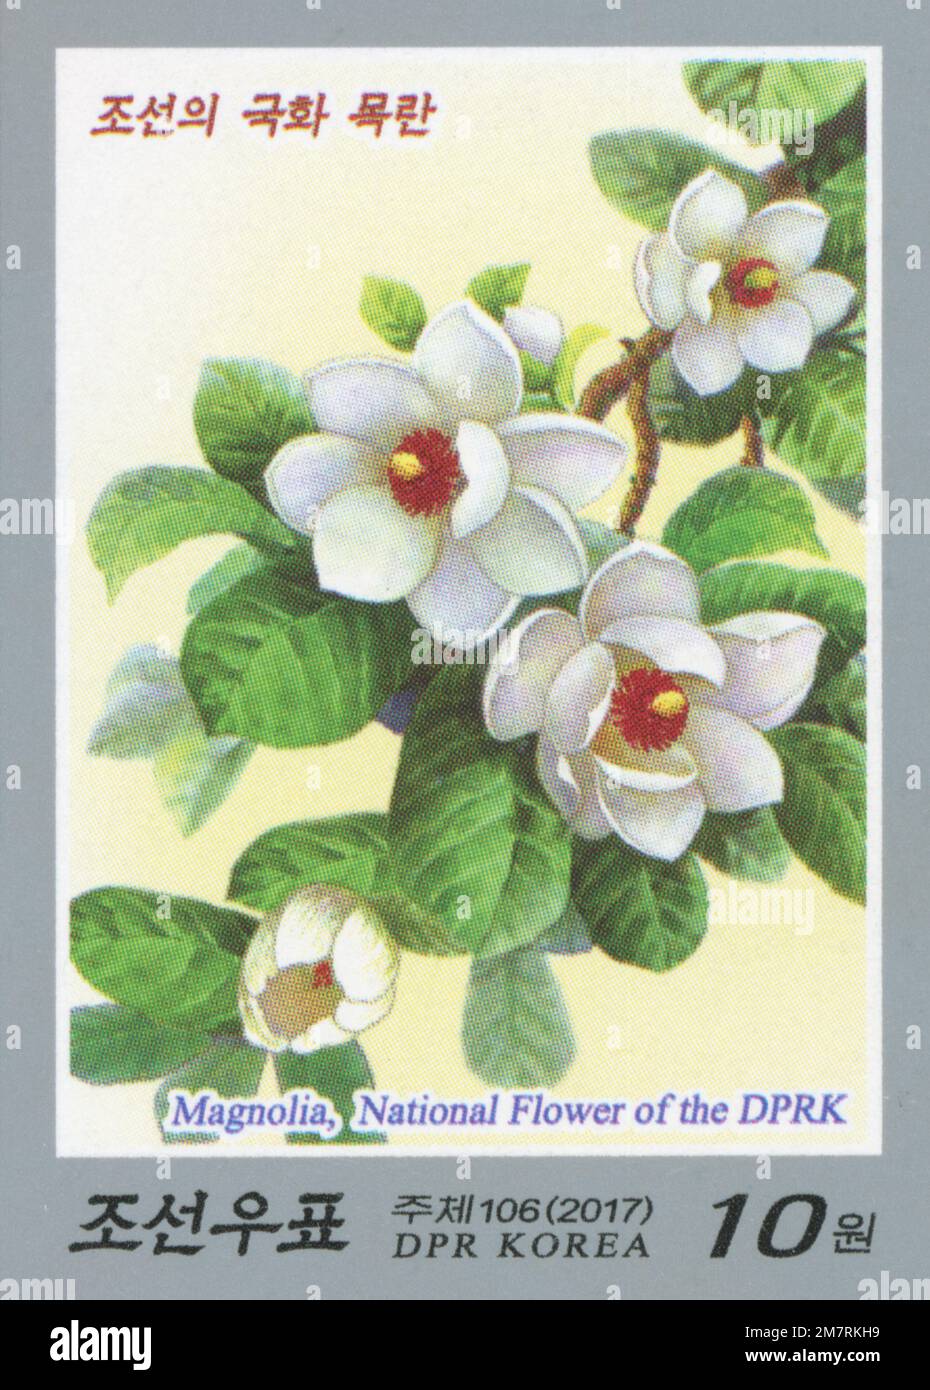 north korean national flower